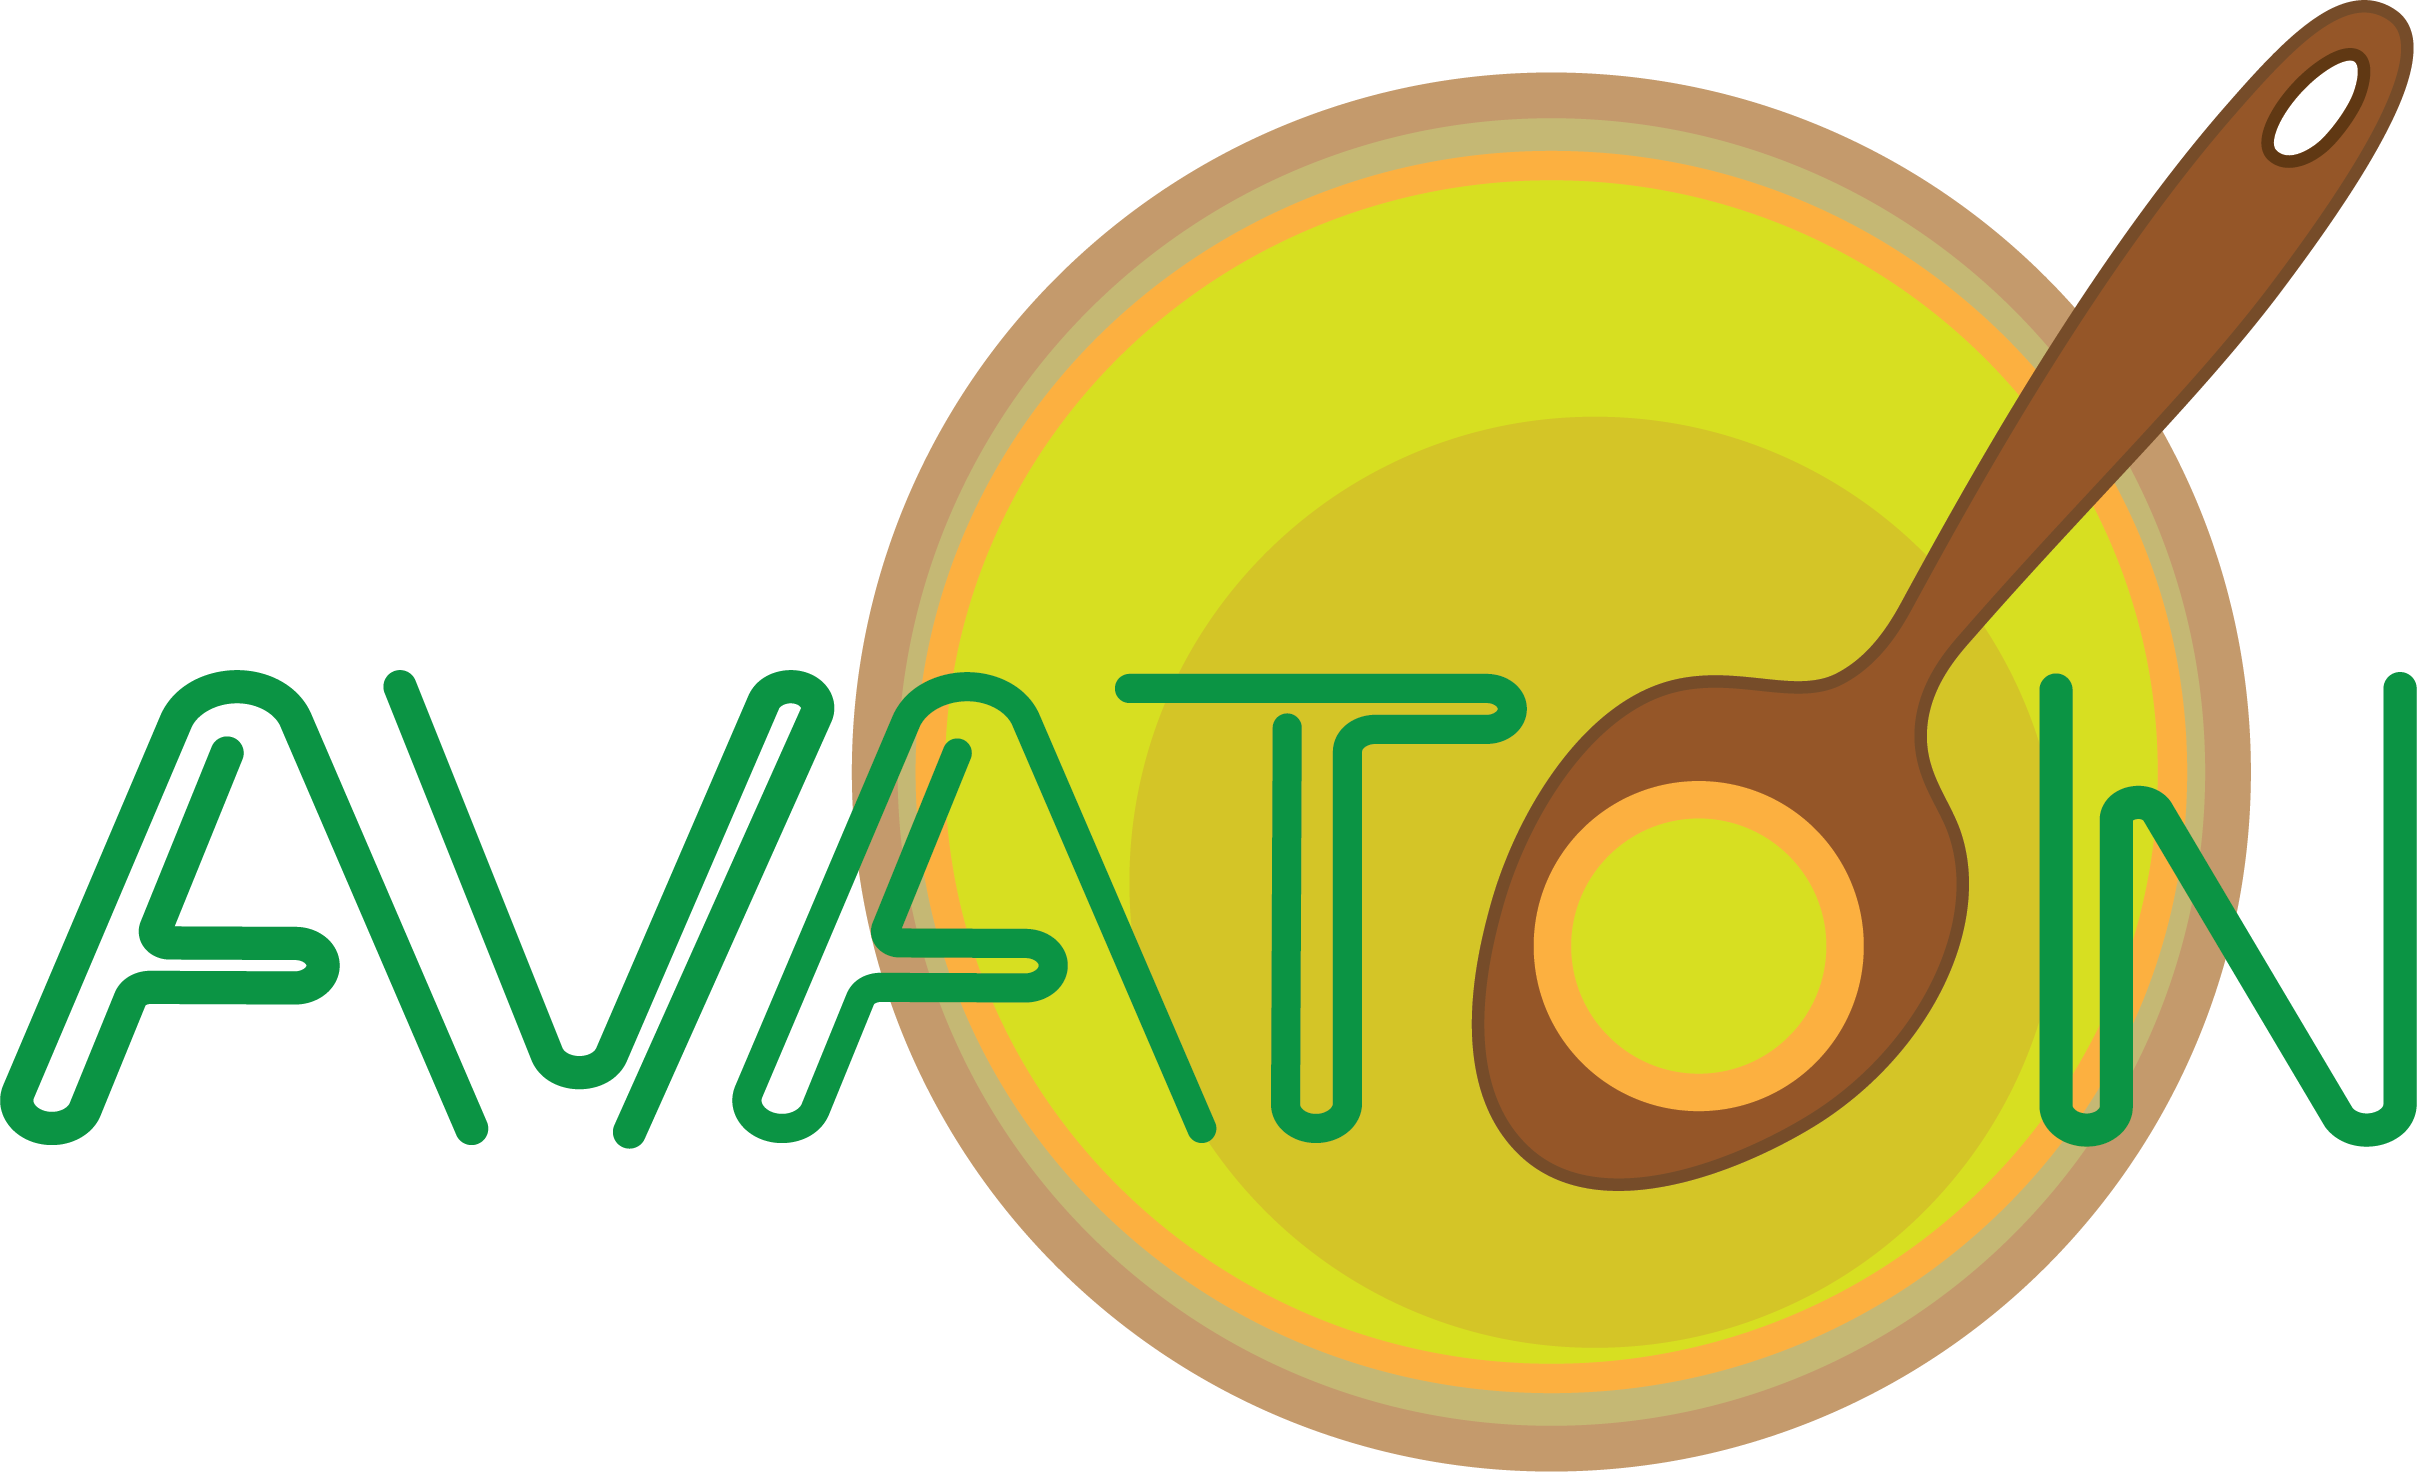 Avaton Food Catering logo